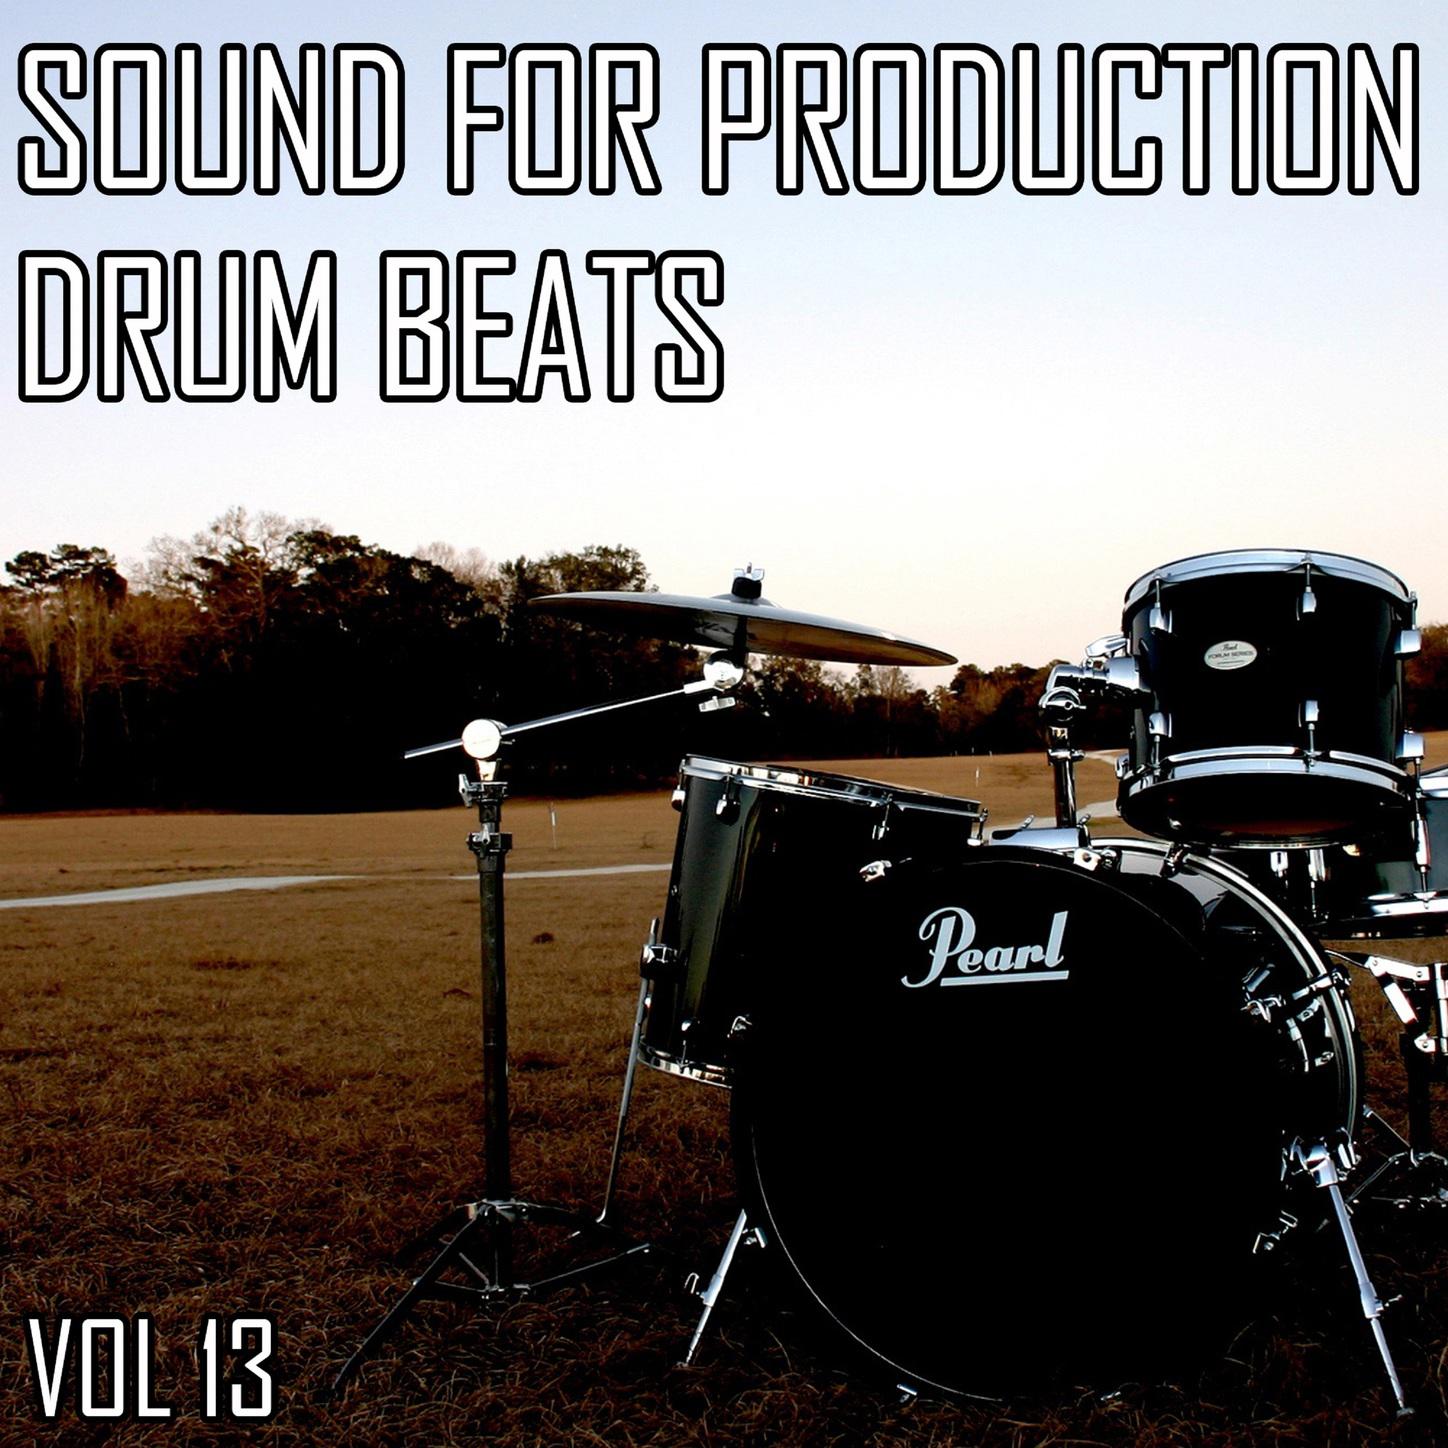 Sound For Production Drum Beats, Vol. 13